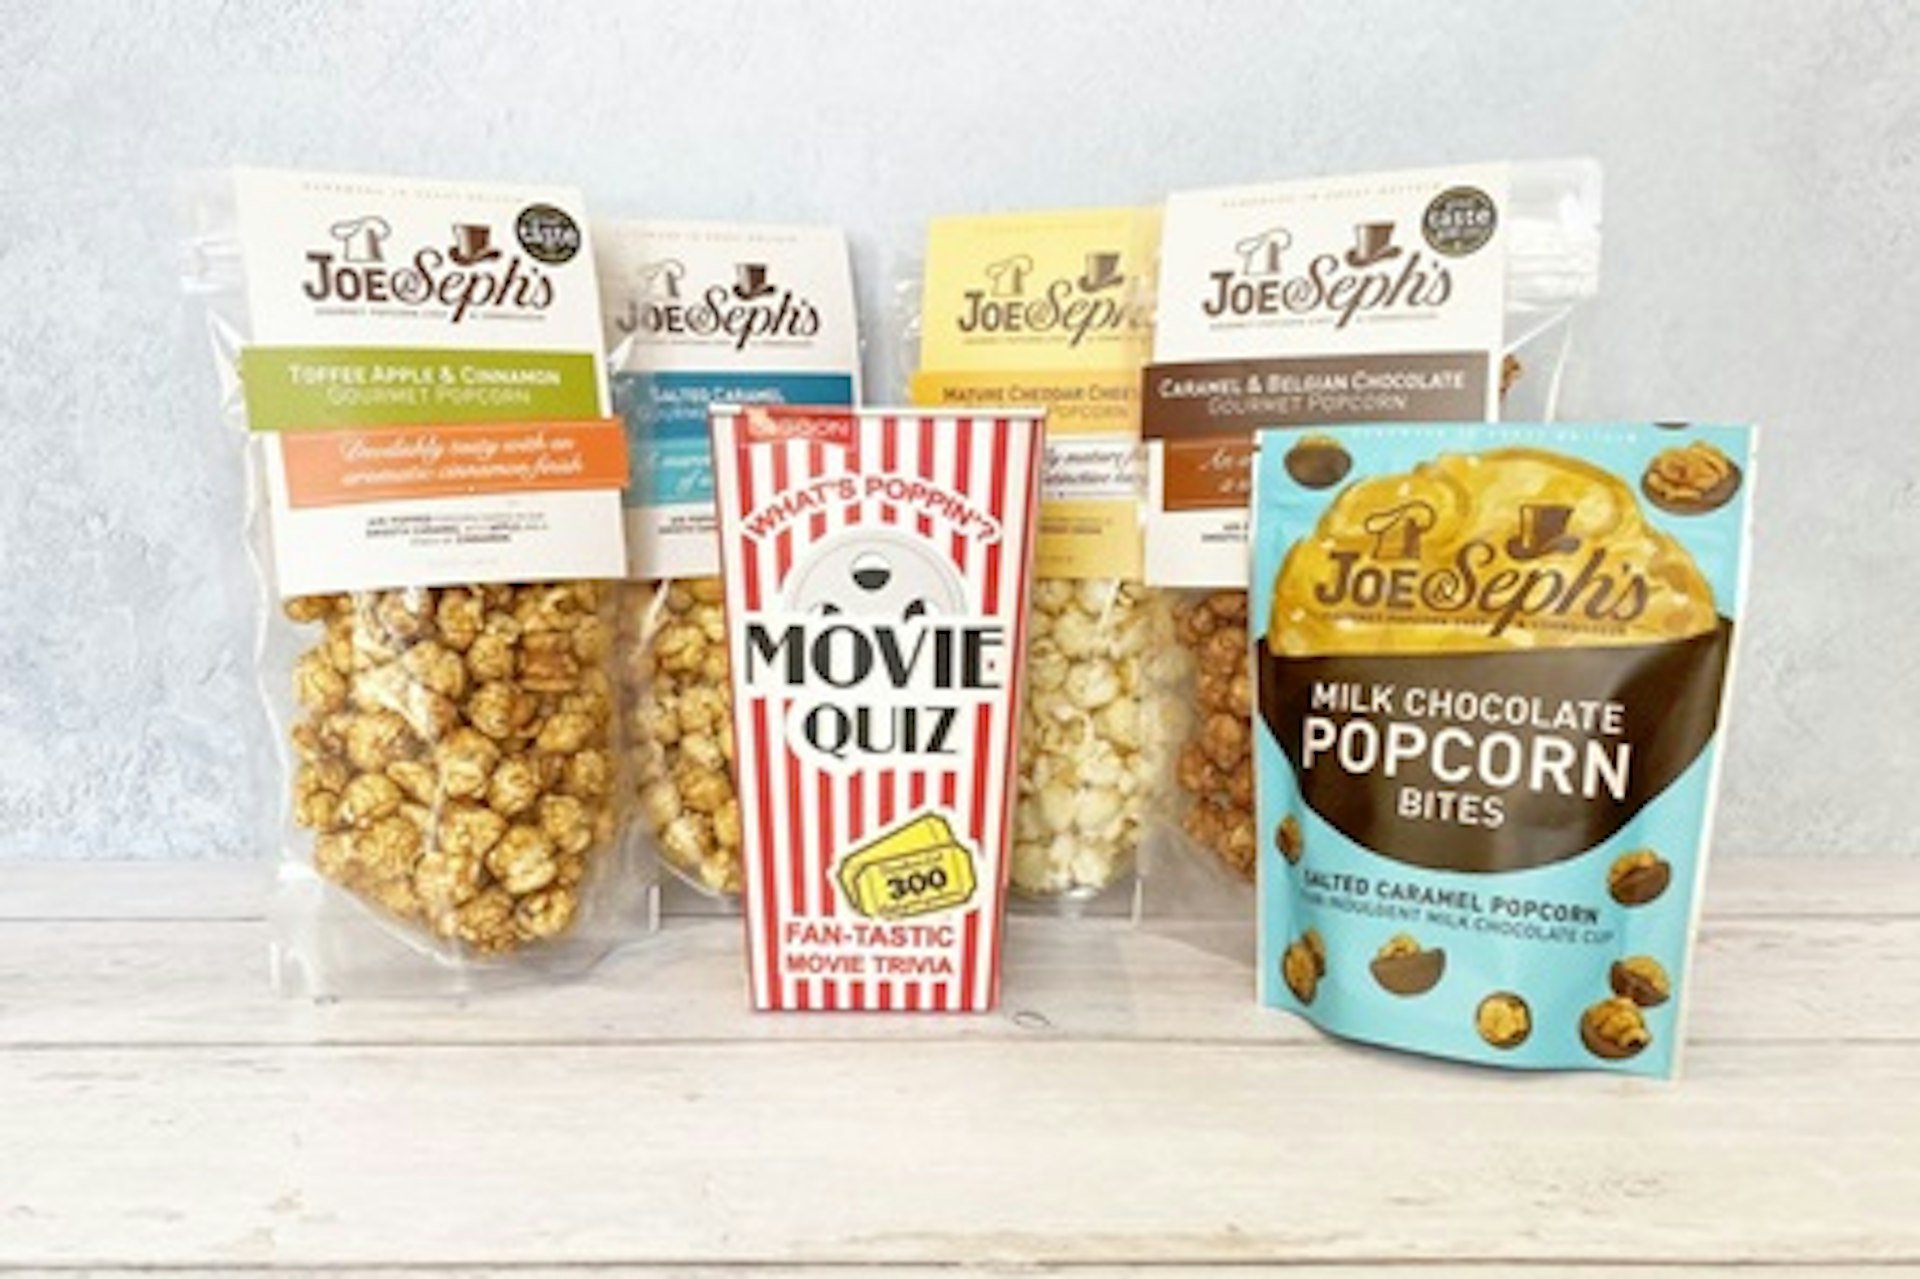 Movie Quiz Gift Box with Joe & Seph’s Popcorn 4